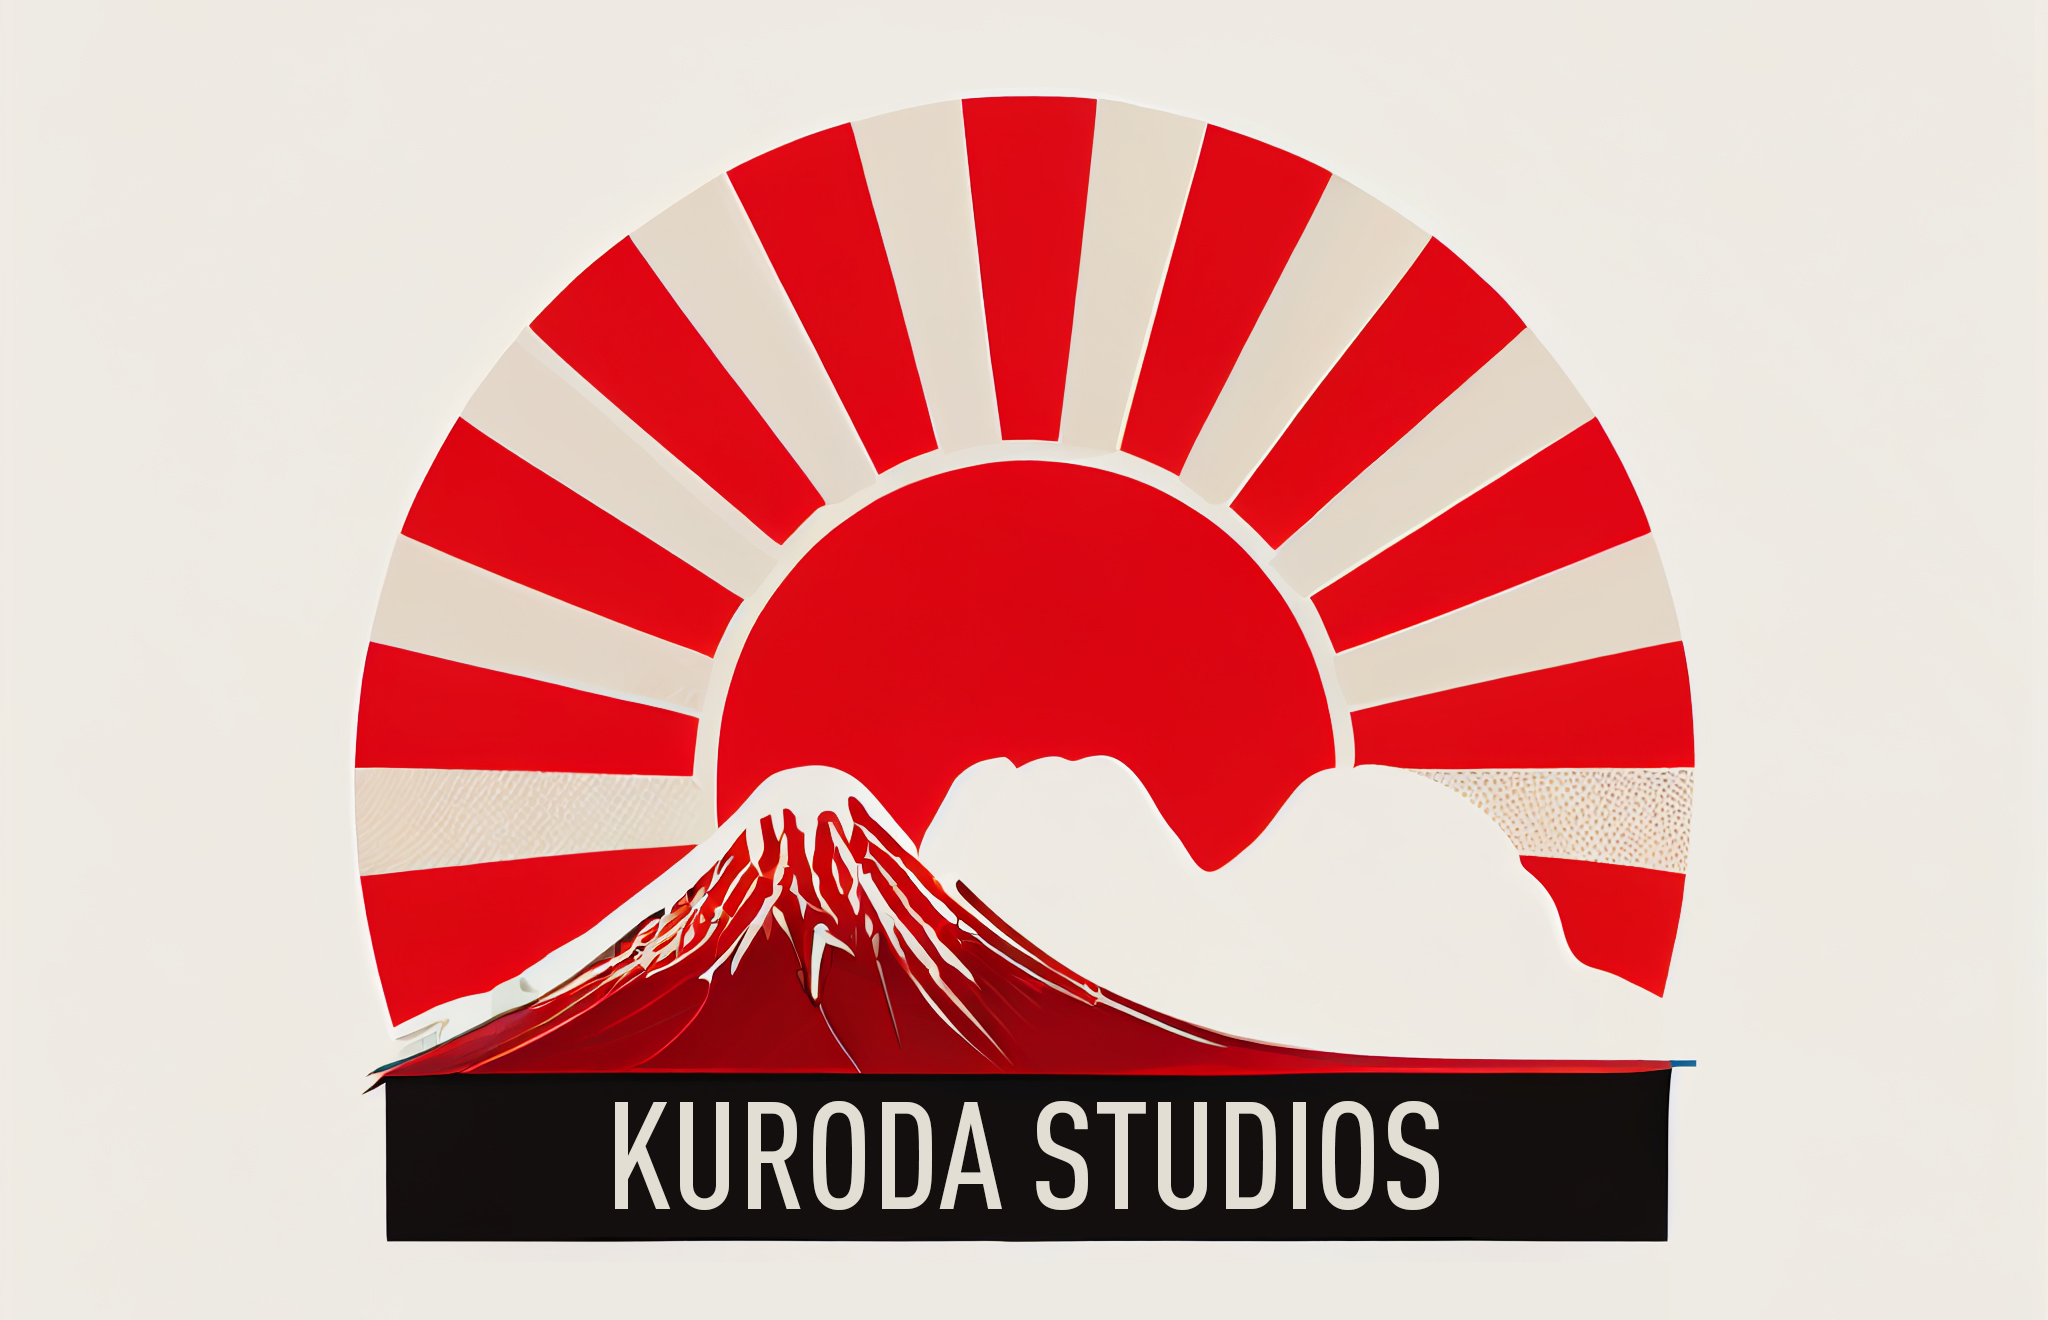 Kuroda Studios